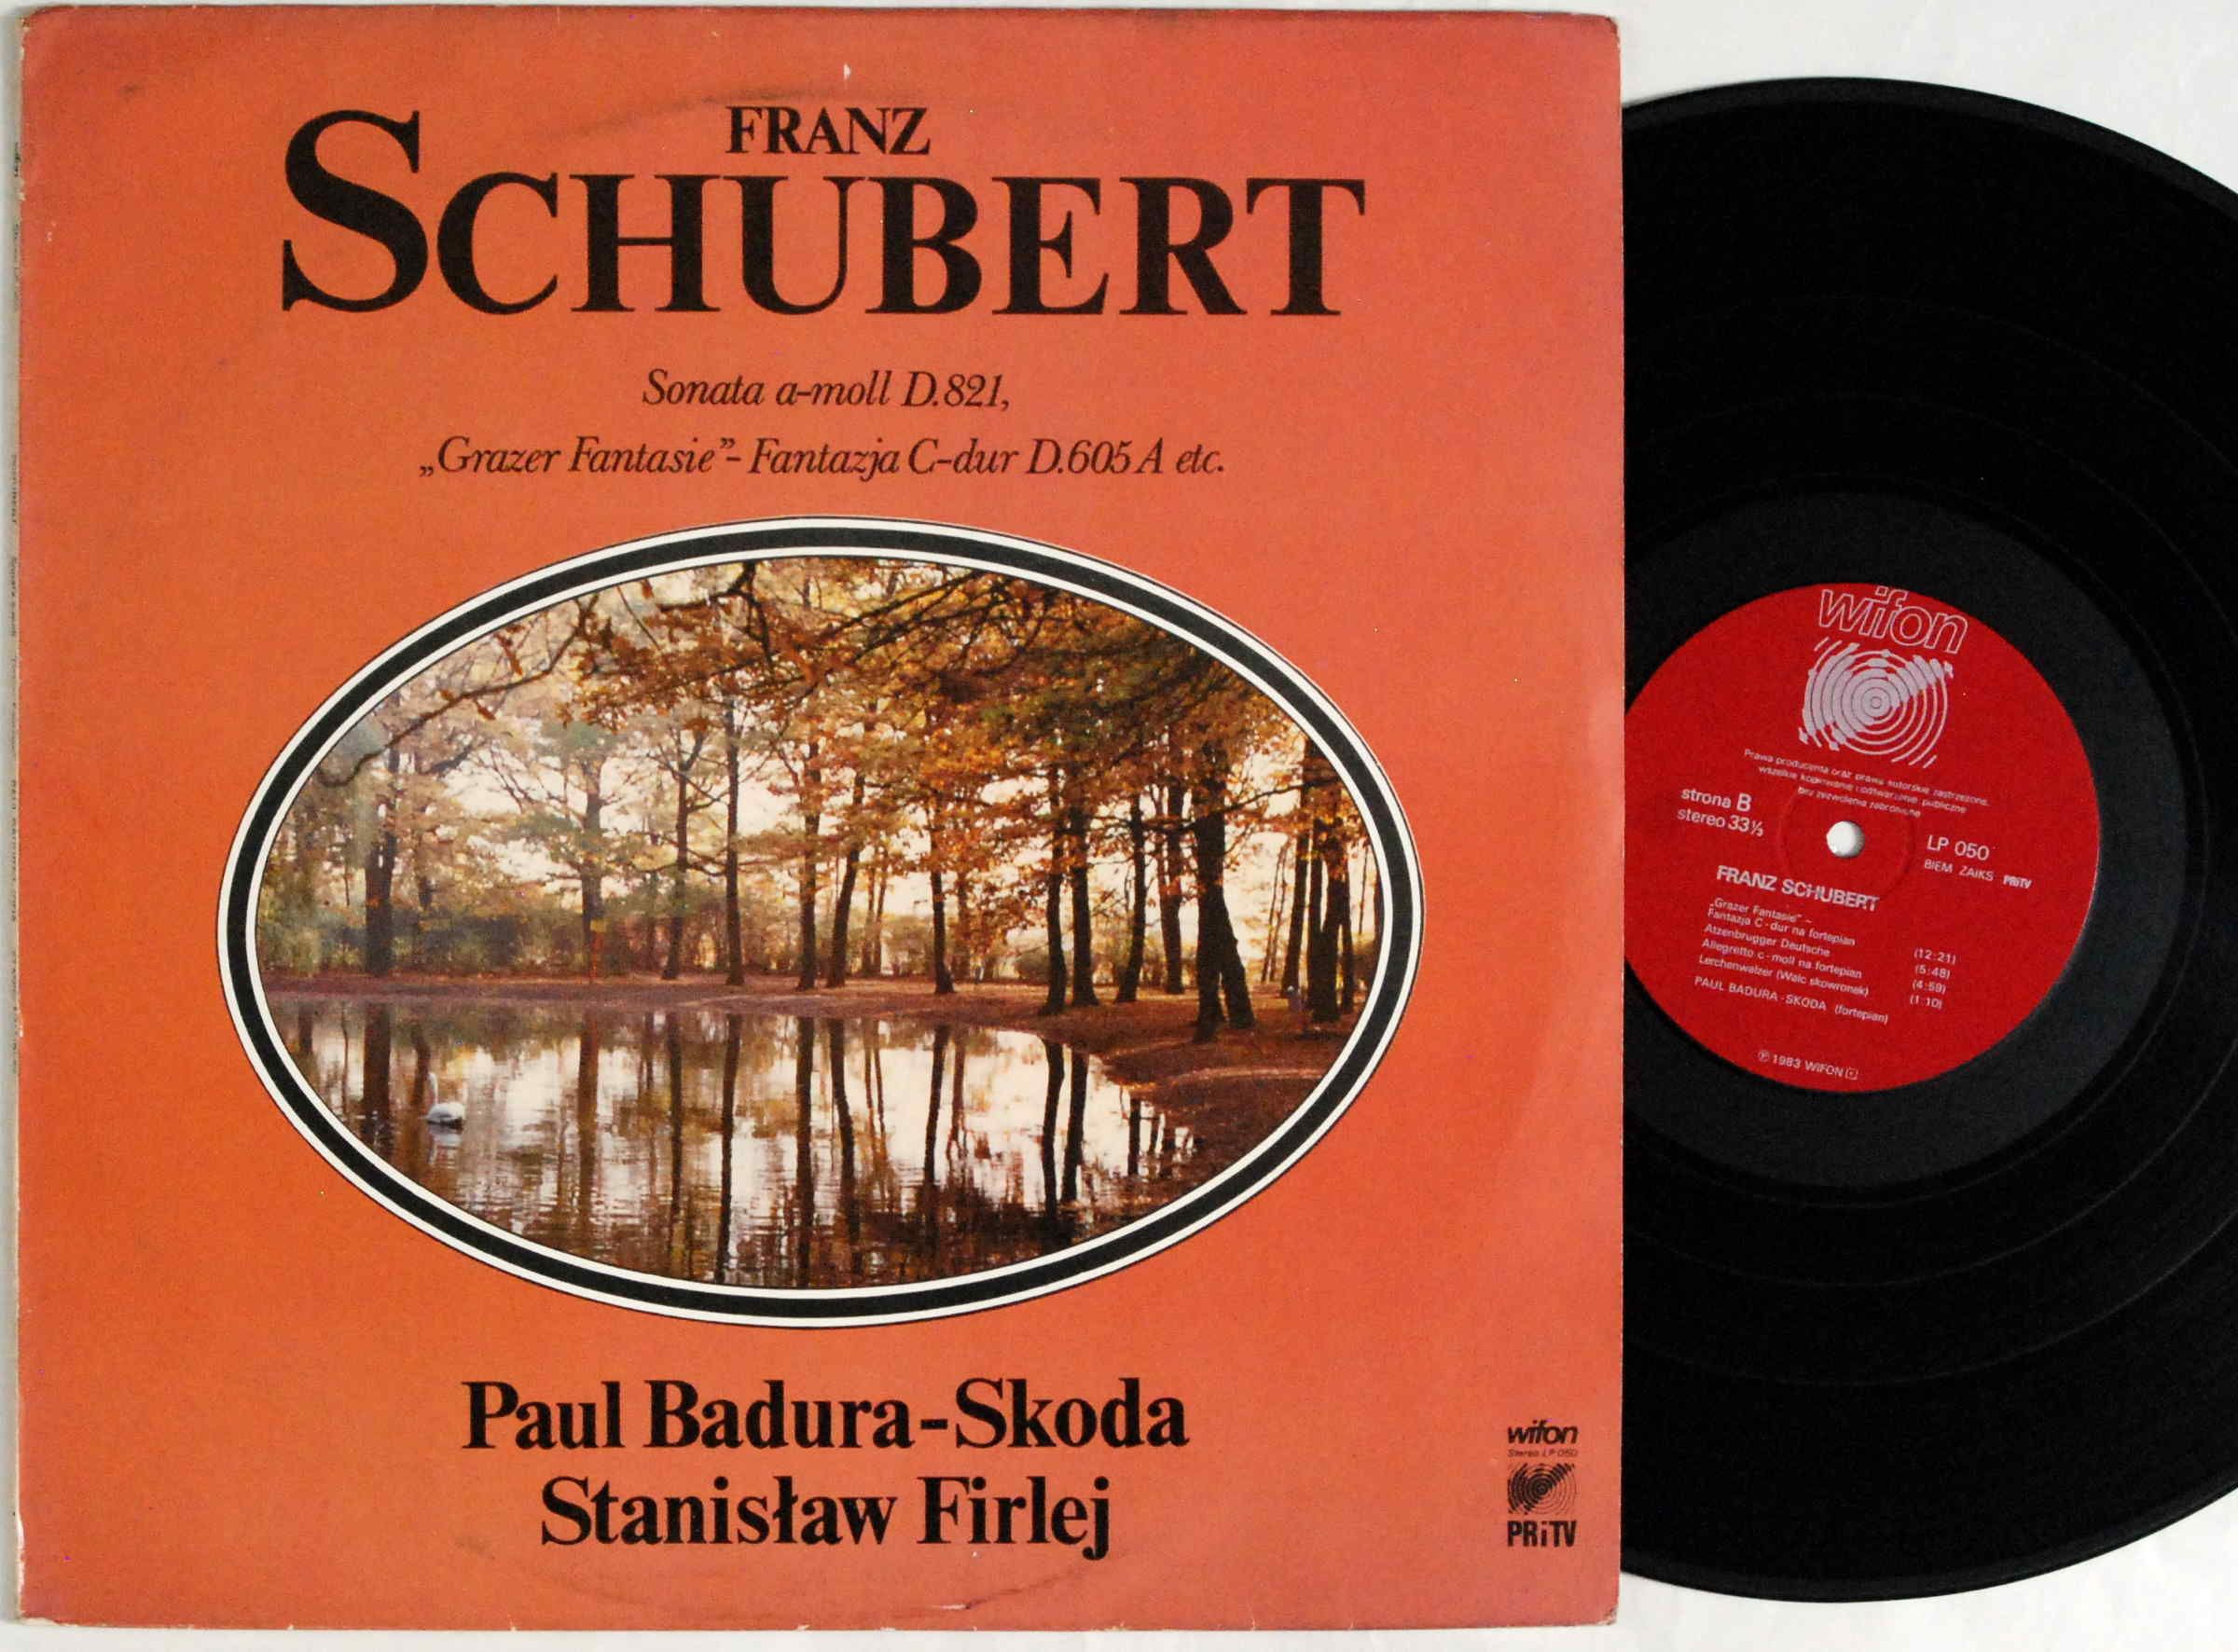 Franz Schubert - Sonata a-moll, Grazer Fantasie